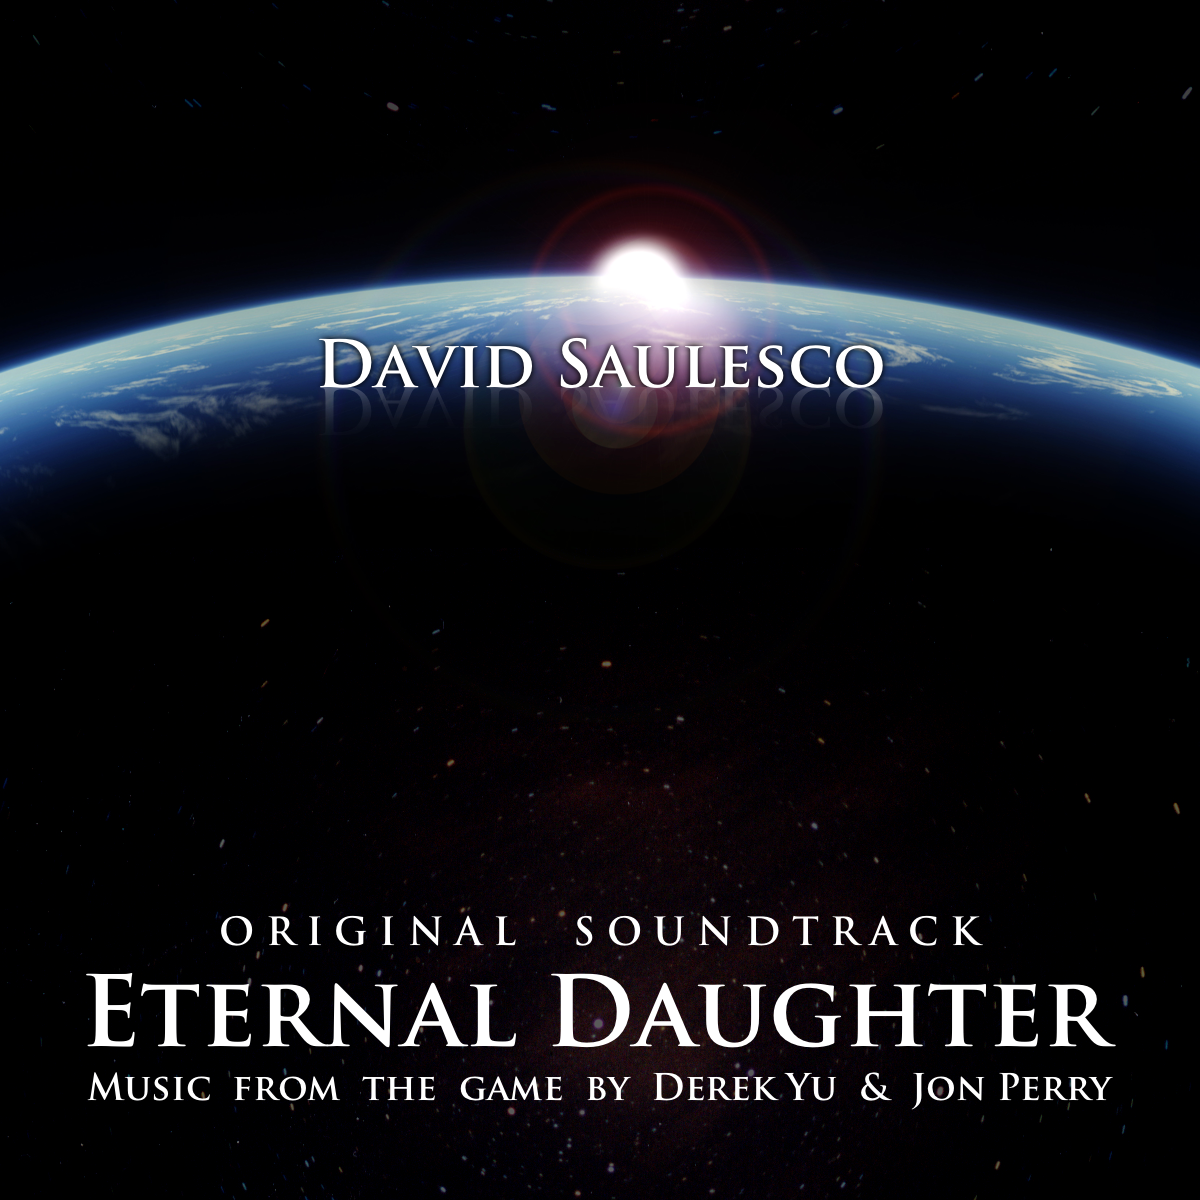 Daughter music. The Eternal daughter. Eternal daughter game. Daughter OST.